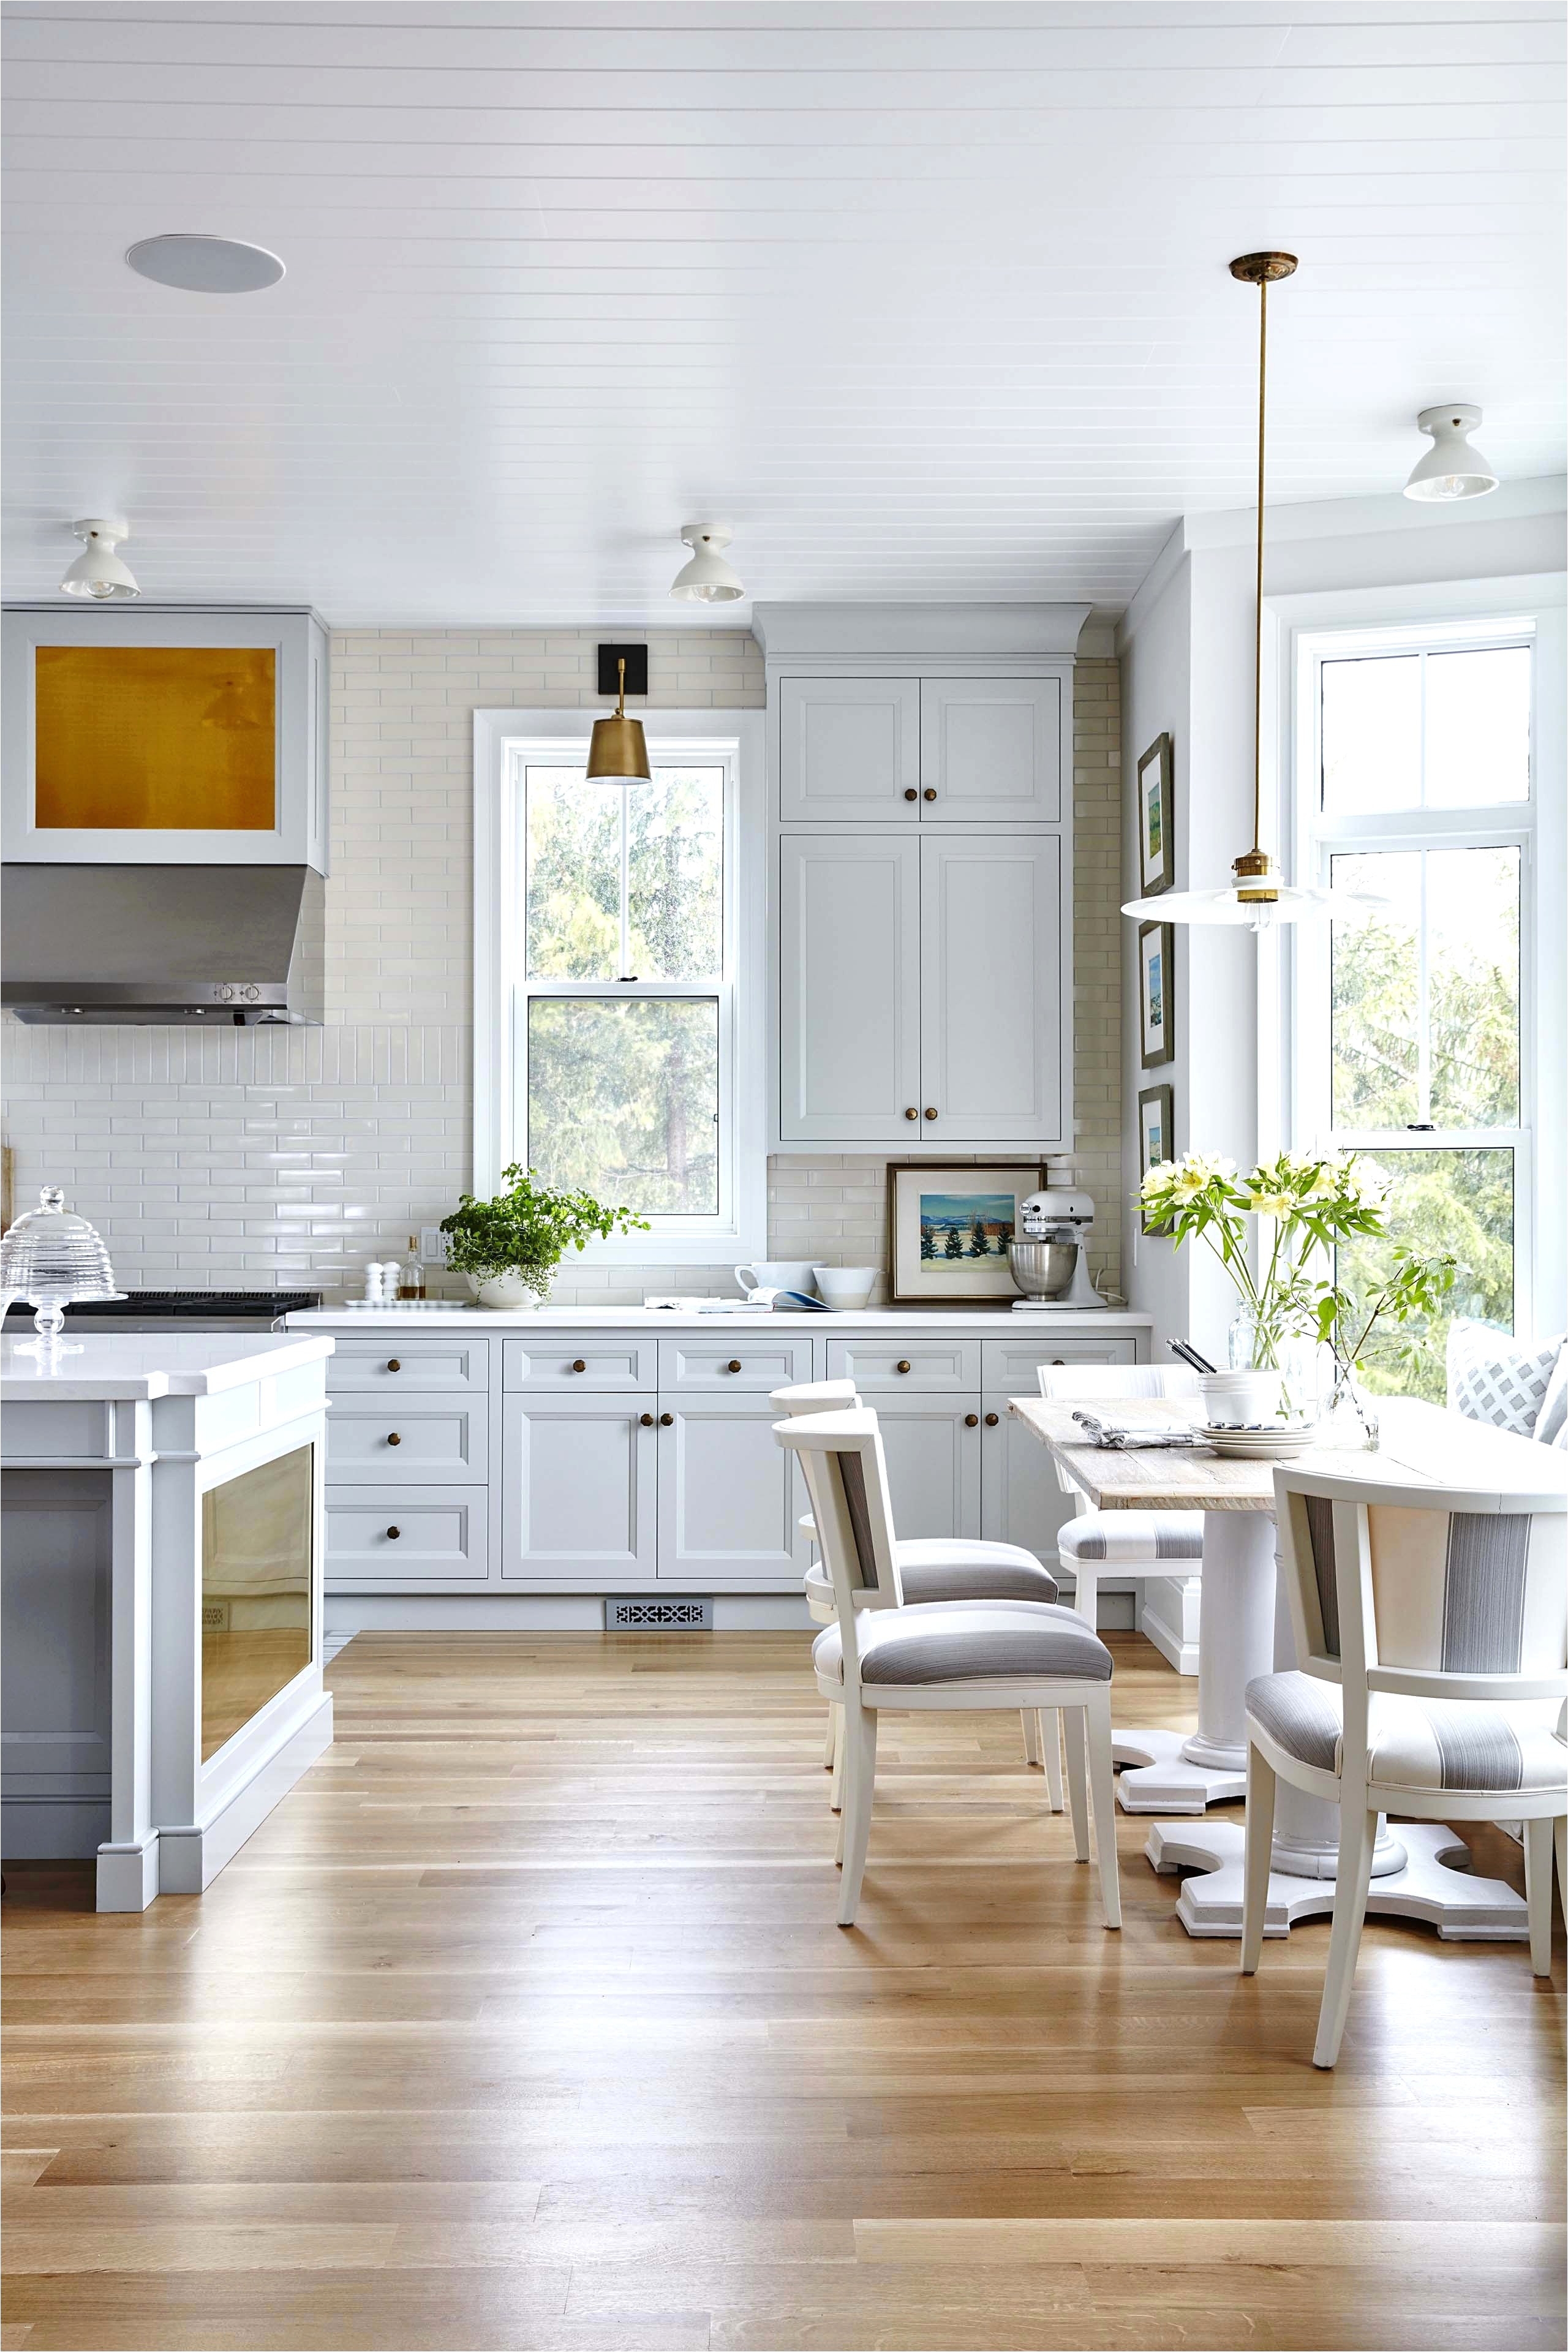 kitchens designs fresh white kitchen design lovely h sink kitchen vent i 0d awesome clean 30